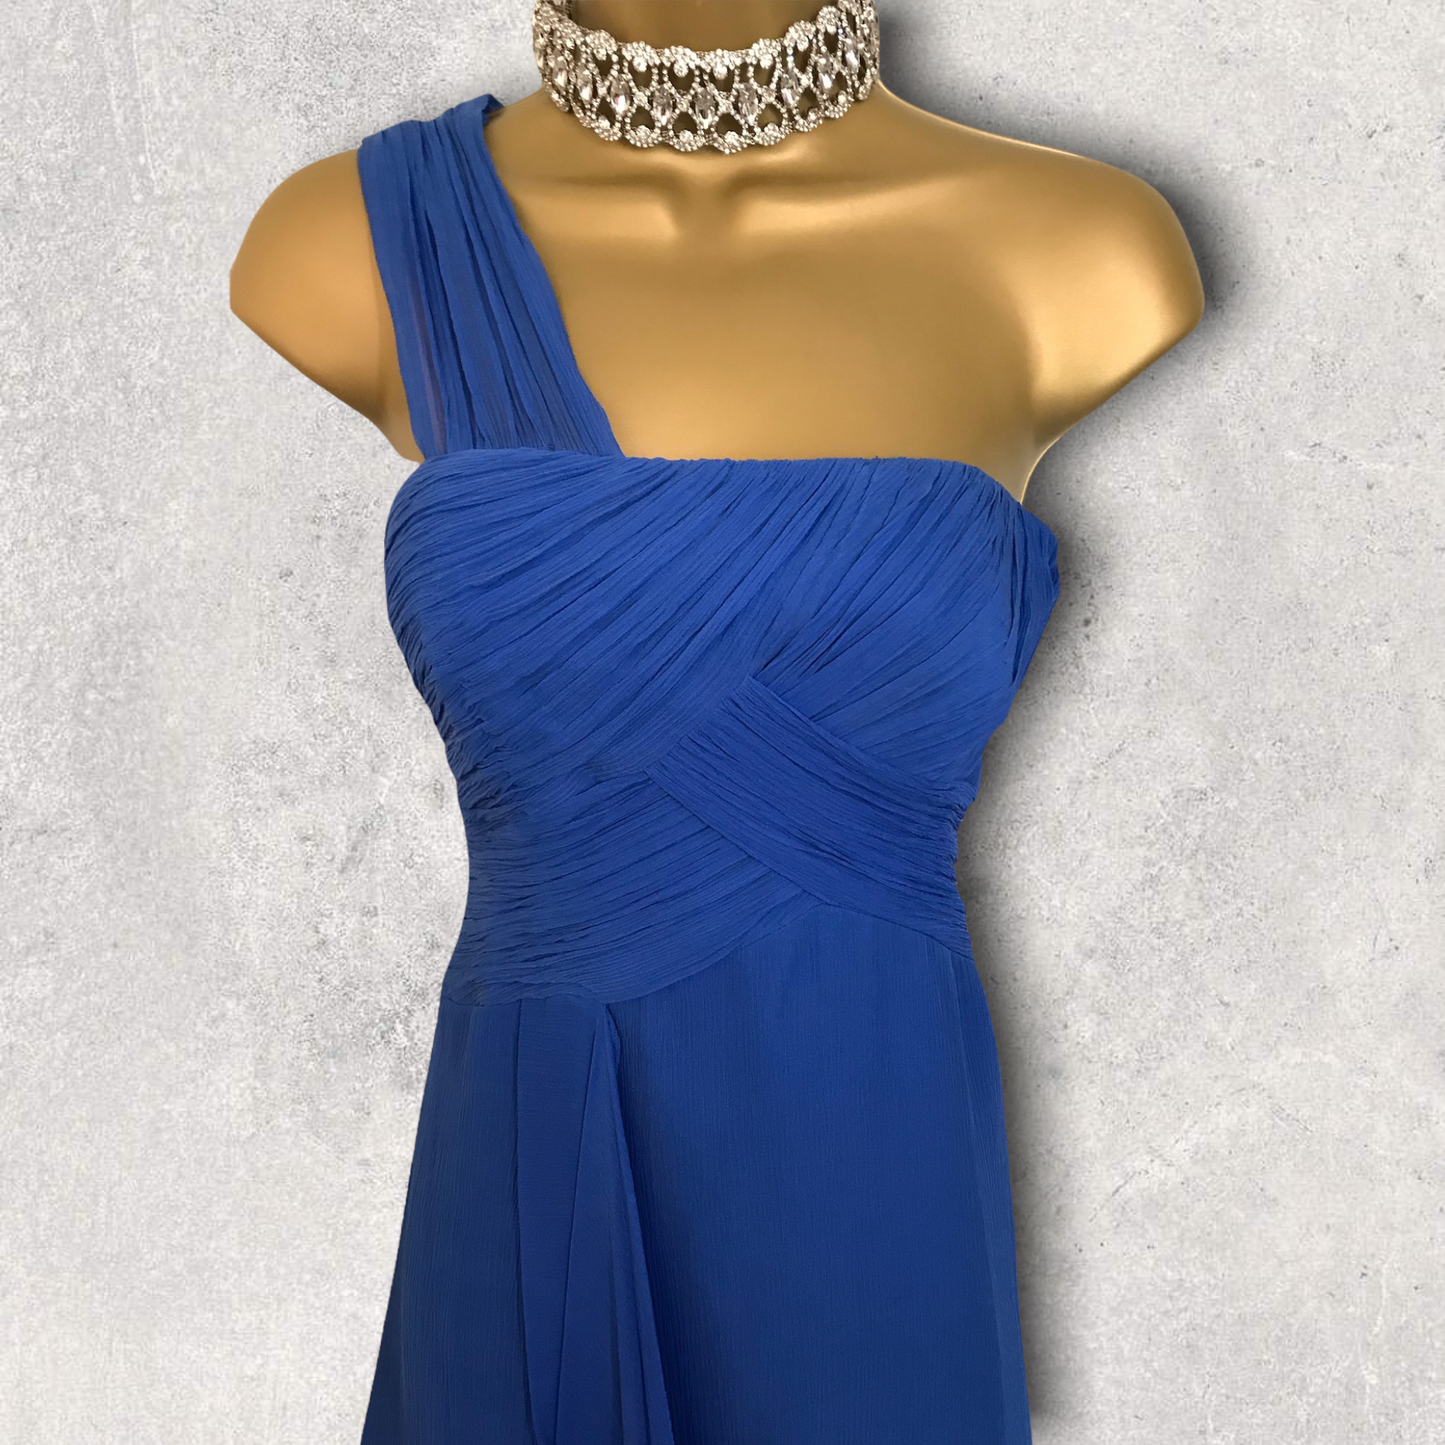 Monsoon Rhumba Blue One Shoulder Silk Dress UK 10 US 6 EU 38 BNWT RRP £135 Timeless Fashions